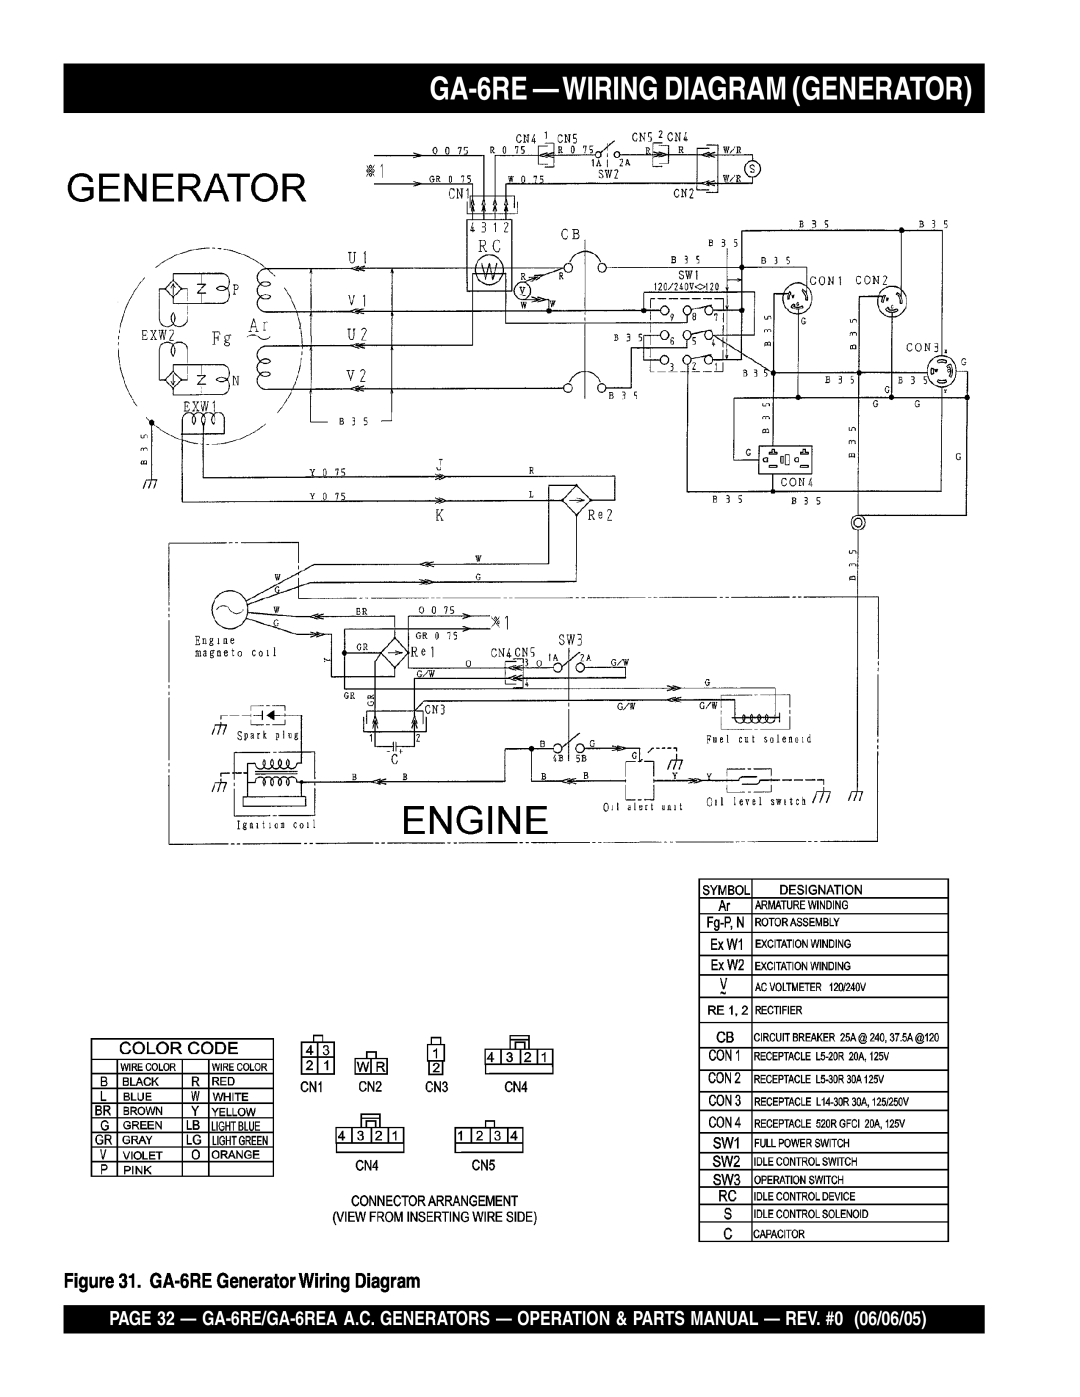 Multiquip GA-6REA manual GA-6RE -WIRINGDIAGRAM GENERATOR, GA-6REGenerator Wiring Diagram 